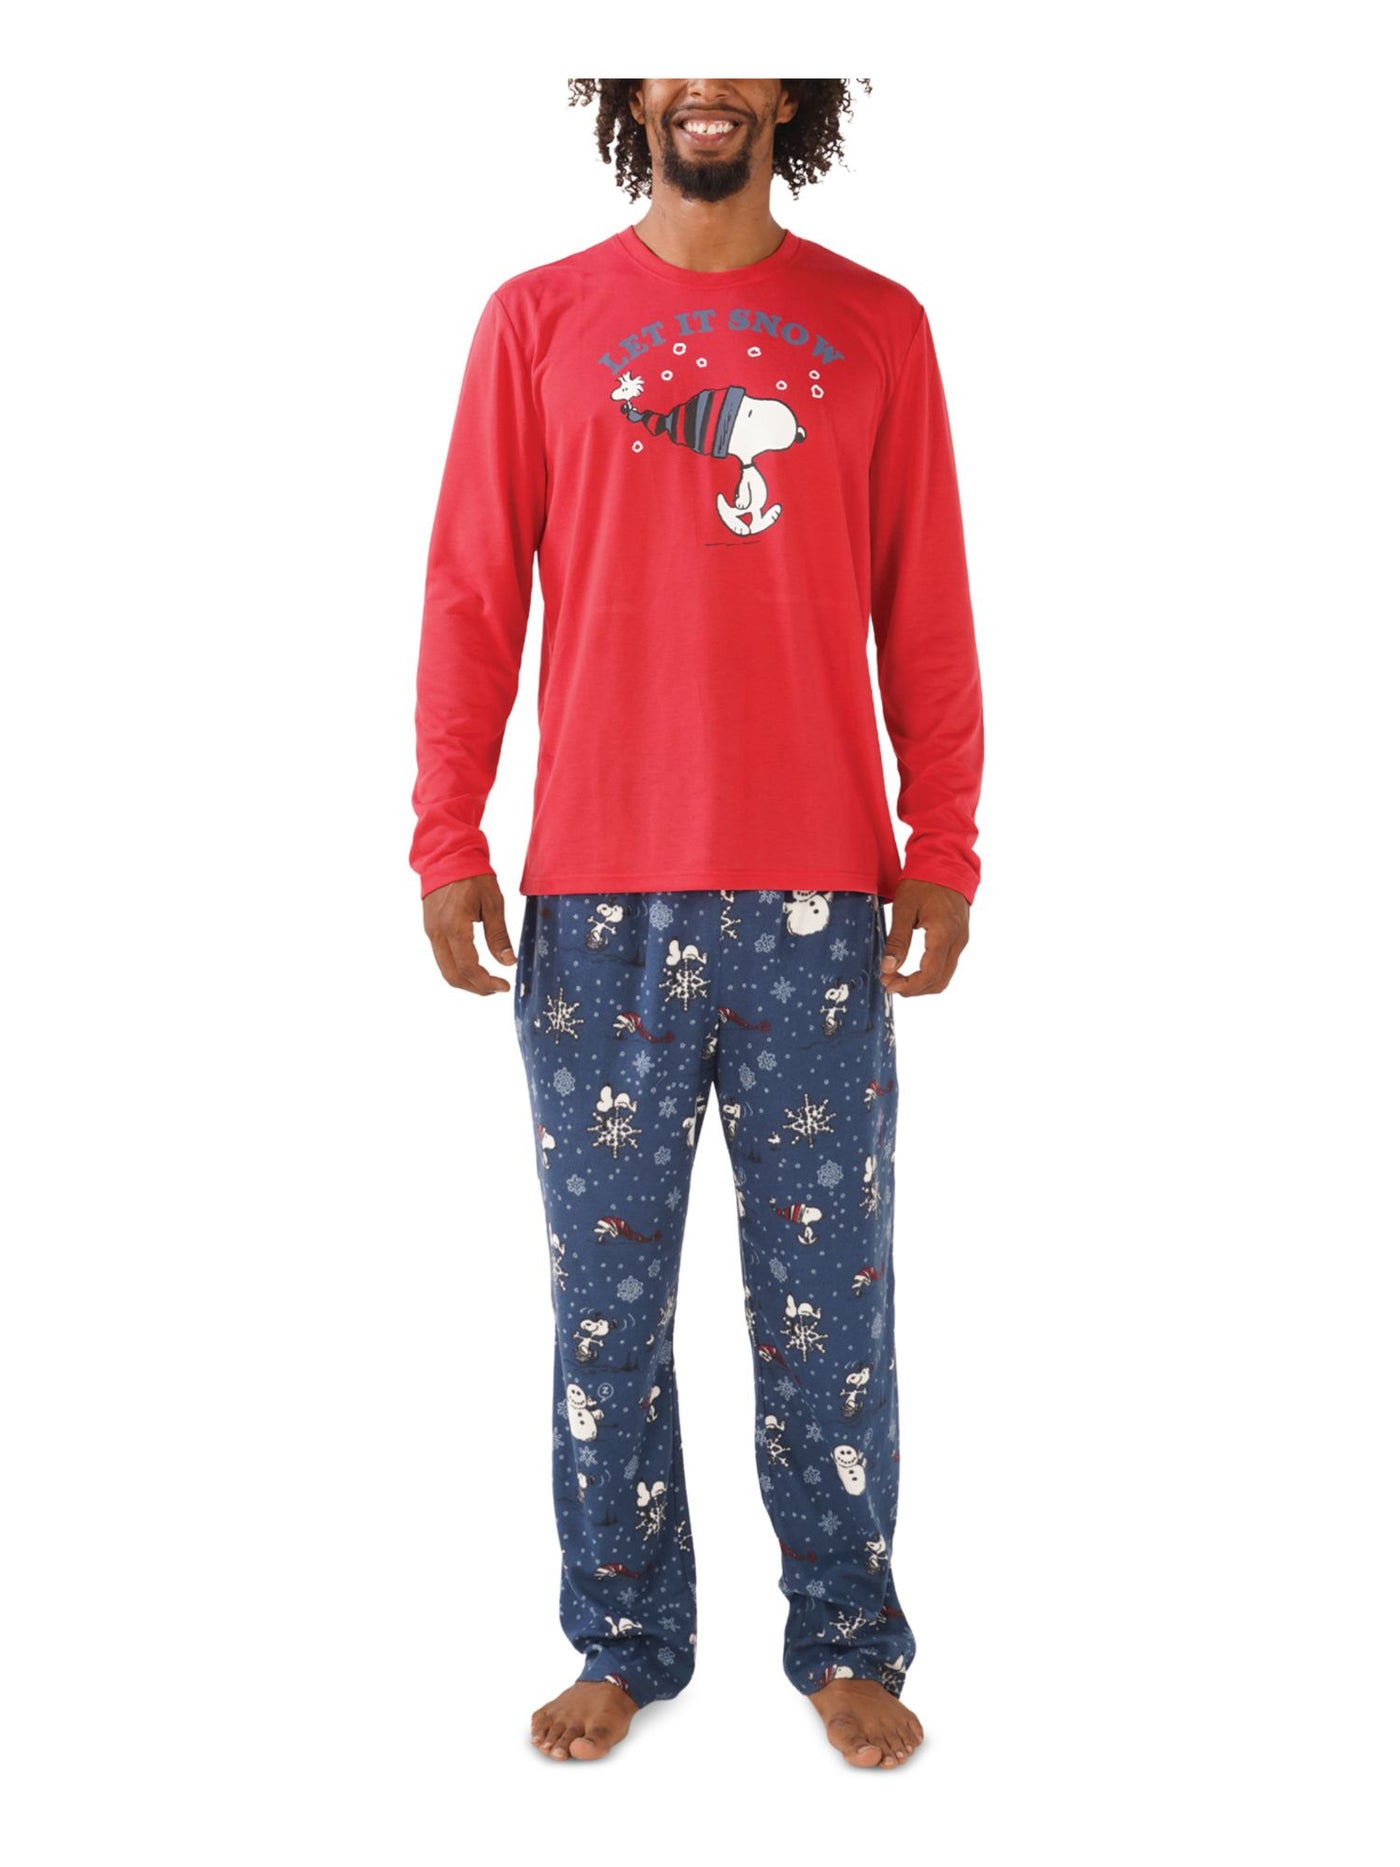 HYBRID APPAREL Mens Navy Graphic Elastic Band Long Sleeve T-Shirt Top Straight leg Pants Pajamas S